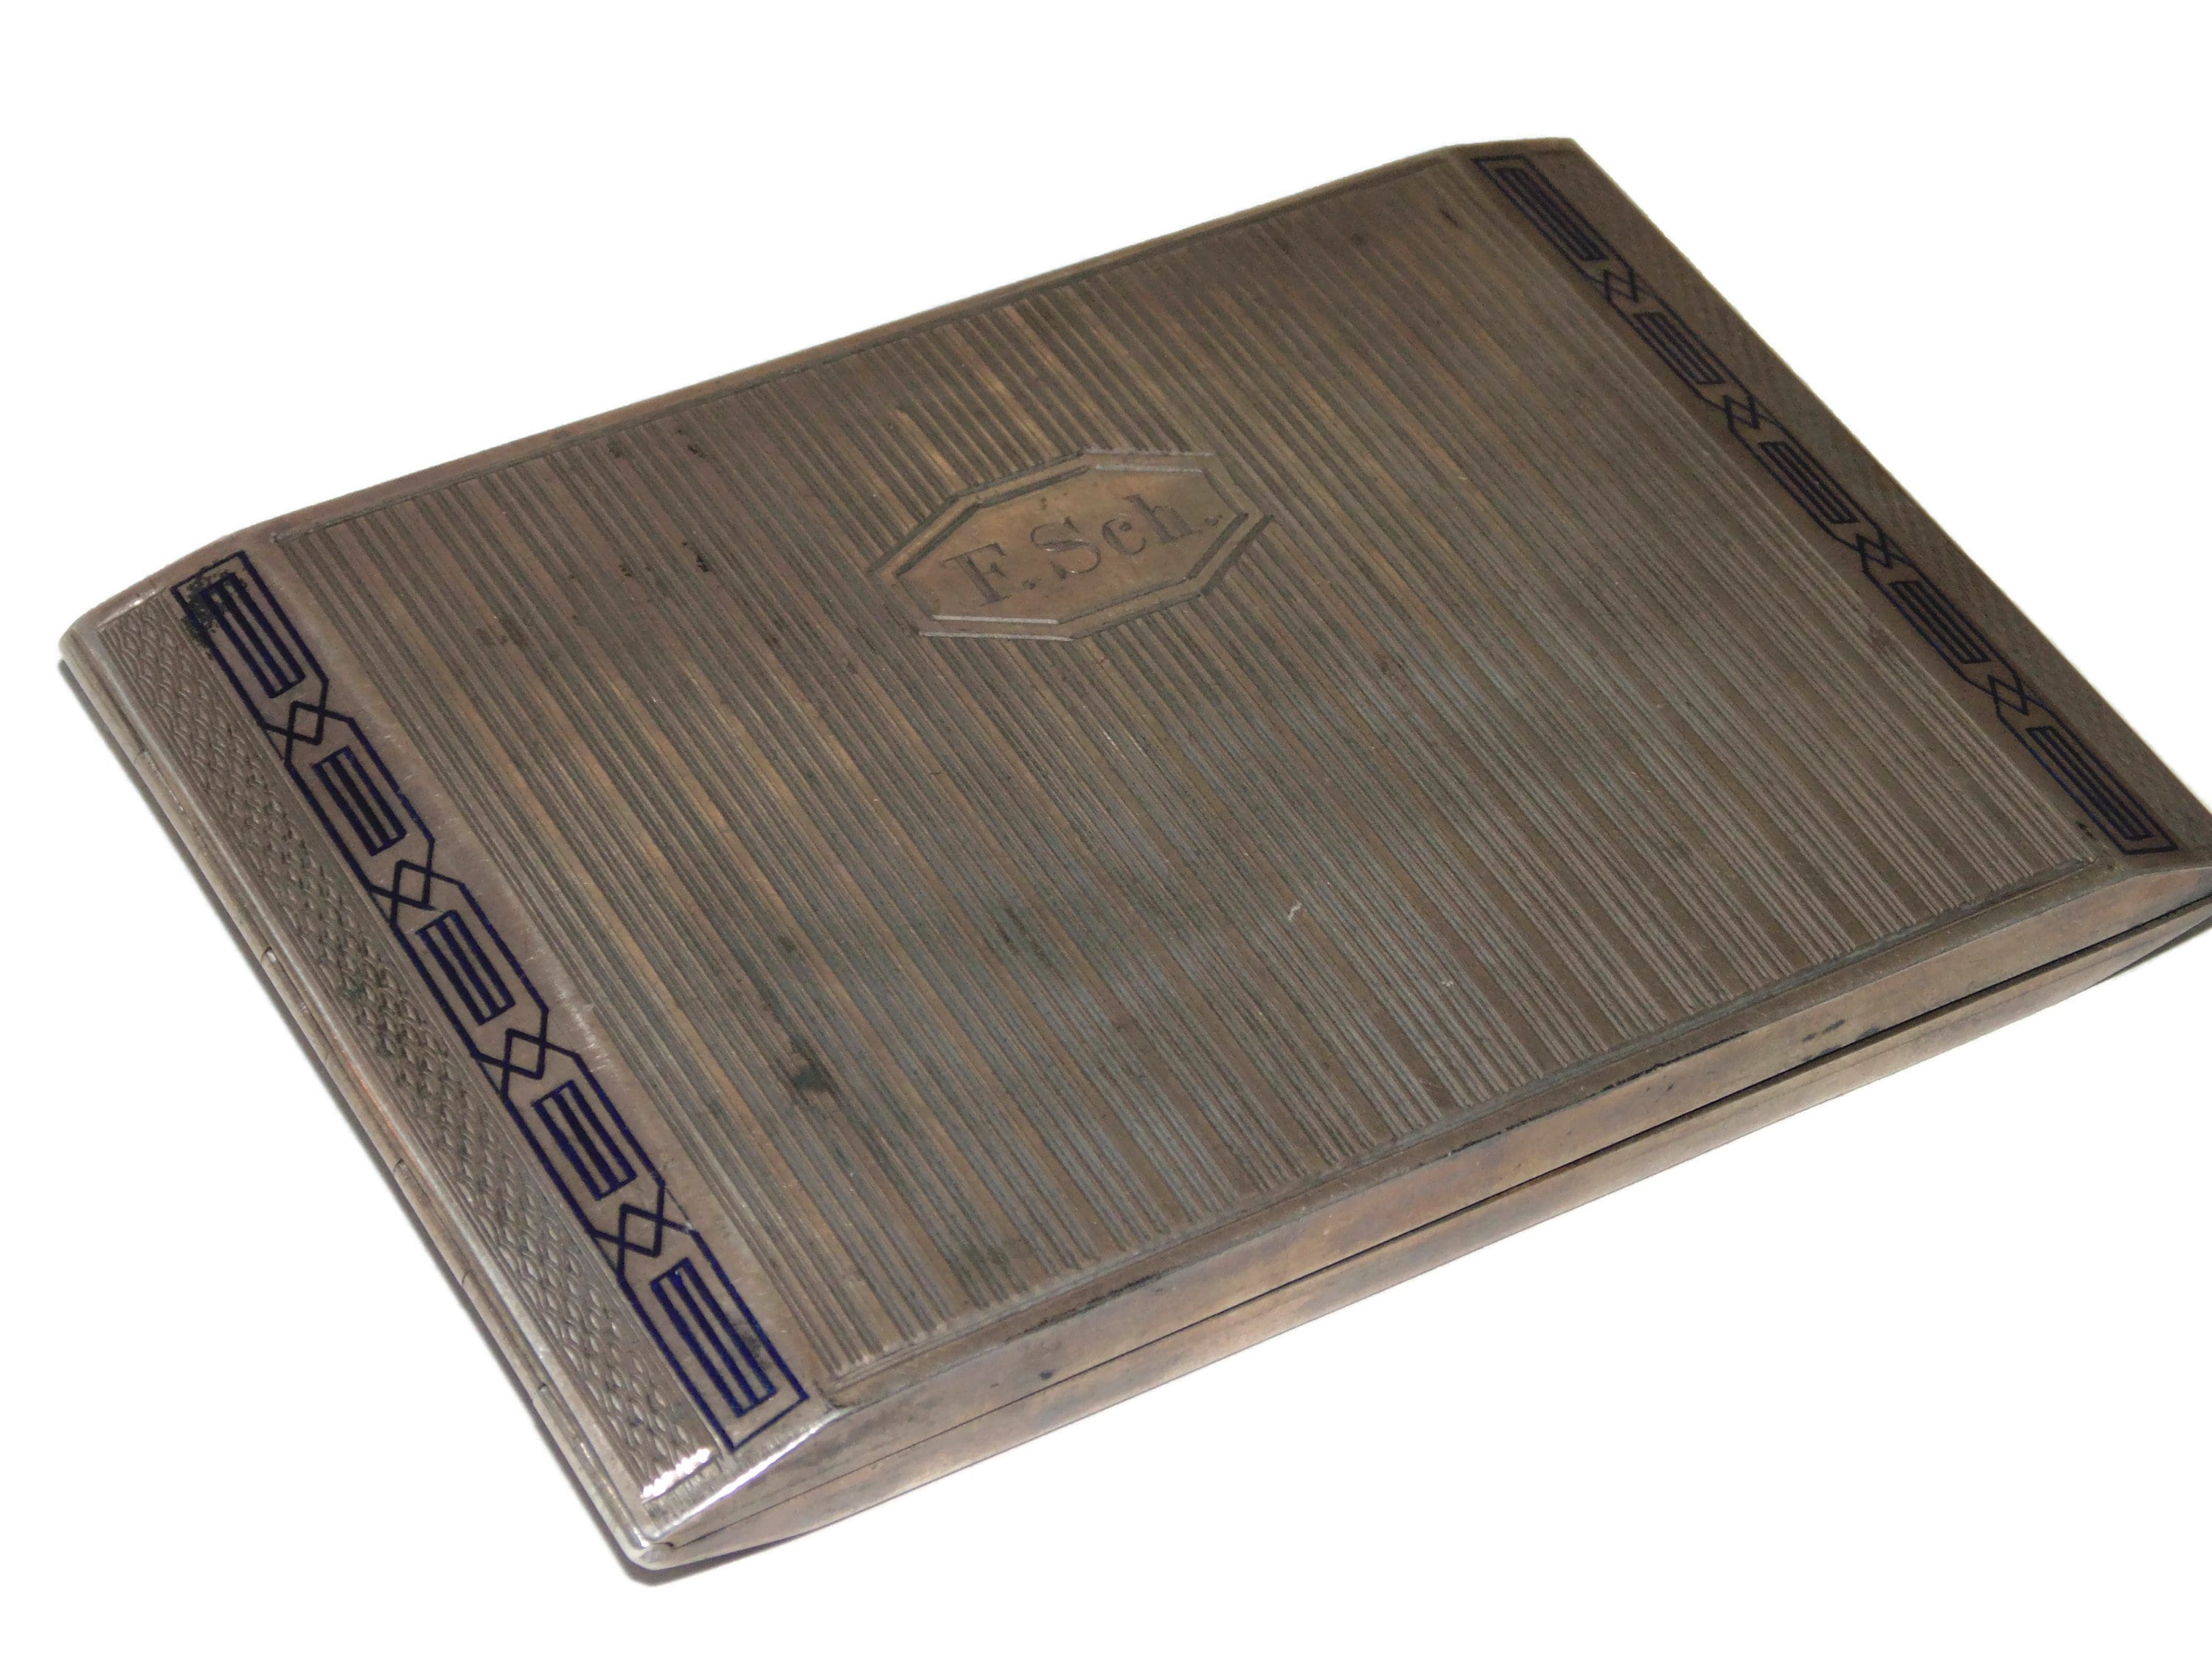 Sold at Auction: Hermes .900 Silver Cigarette Case